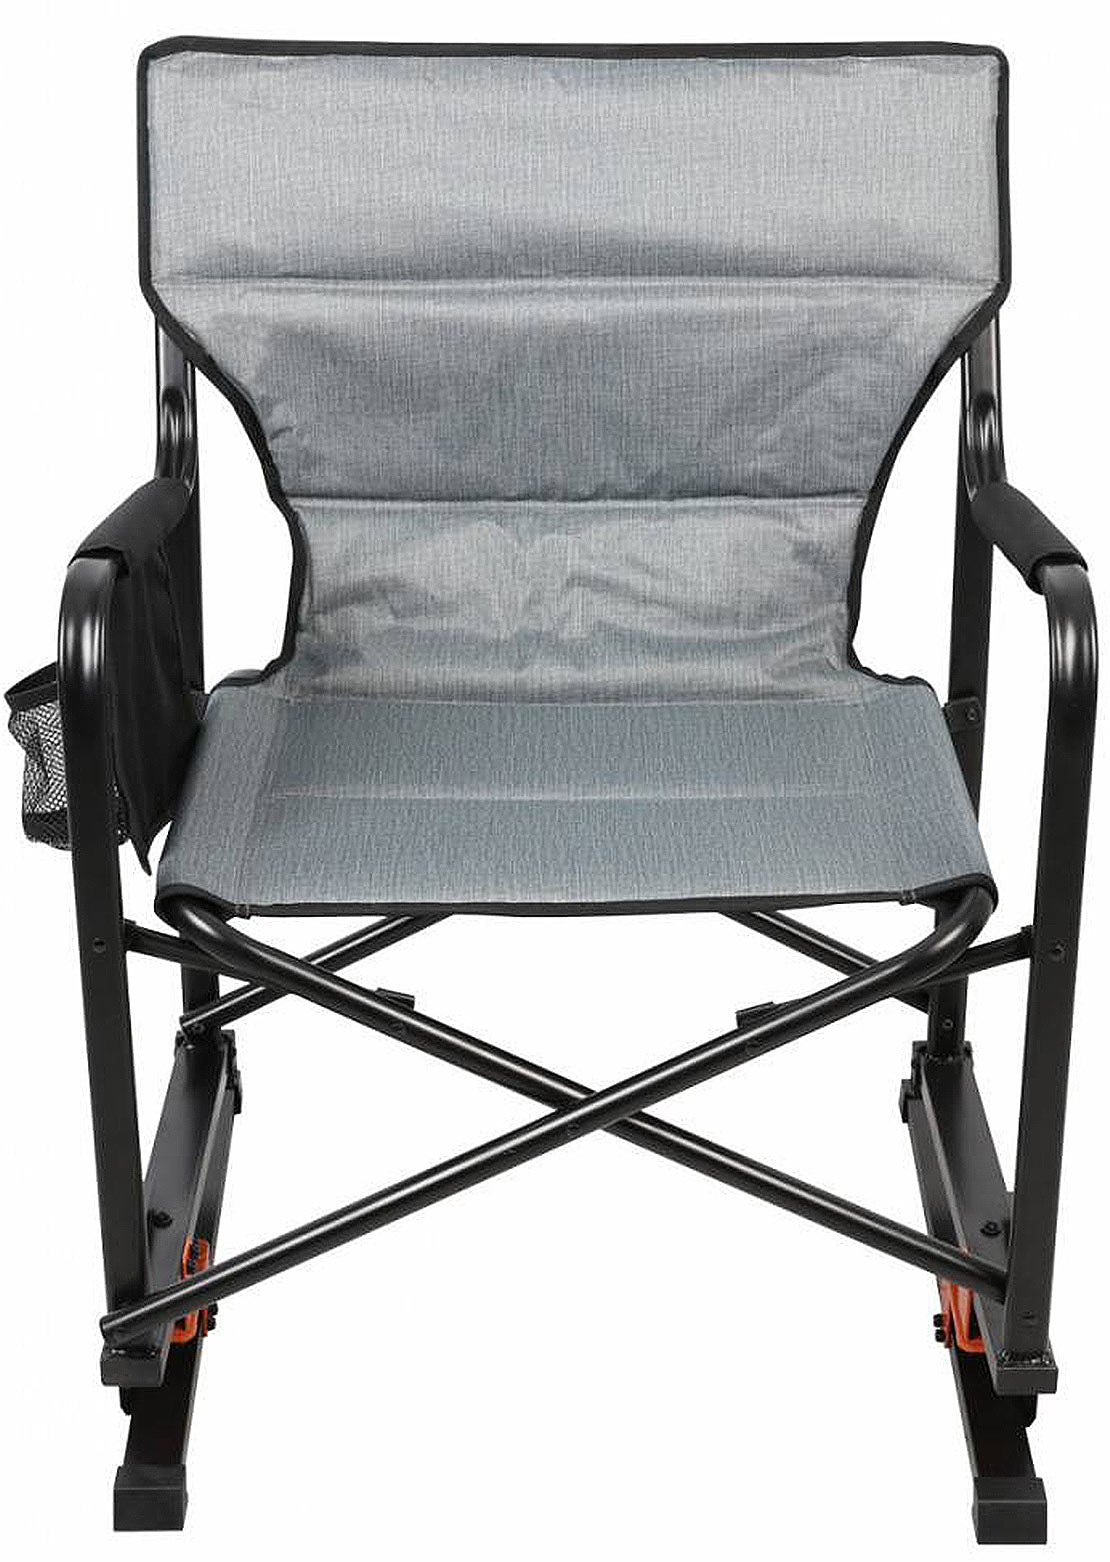 Kuma Outdoor Gear Spring Bear Chair - Quad Fold Heather Grey